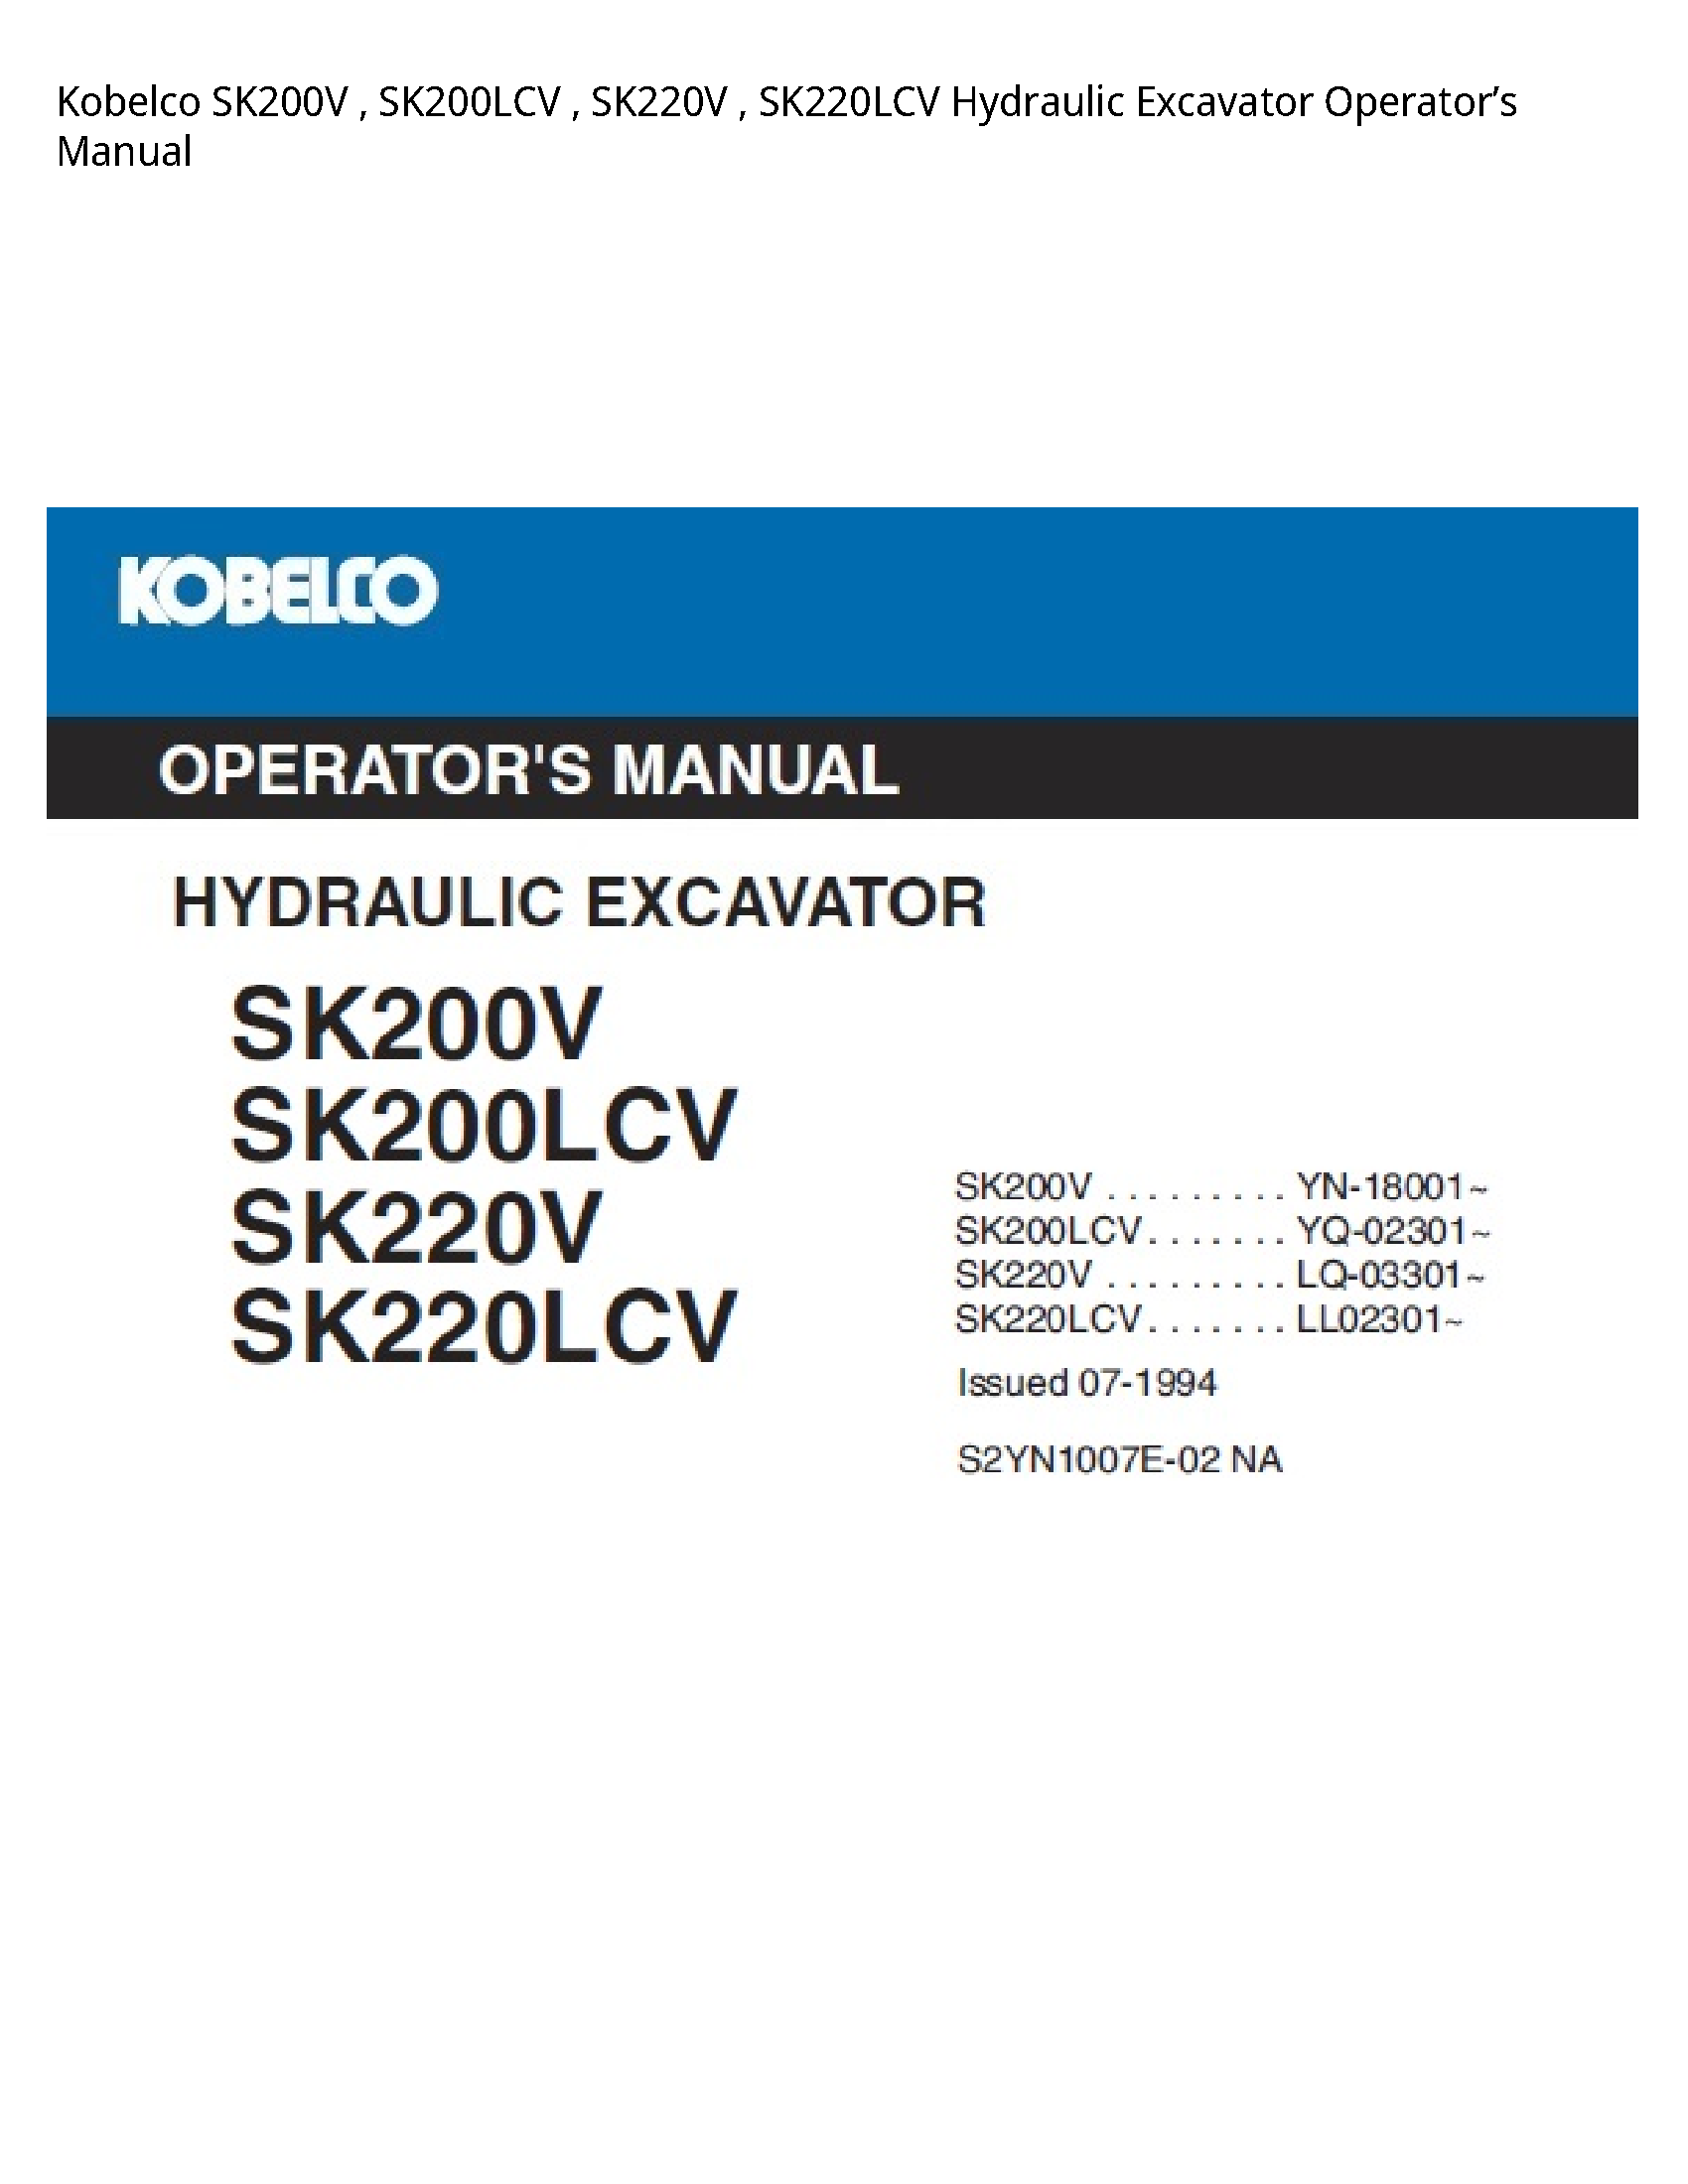 Kobelco SK200V Hydraulic Excavator Operator’s manual